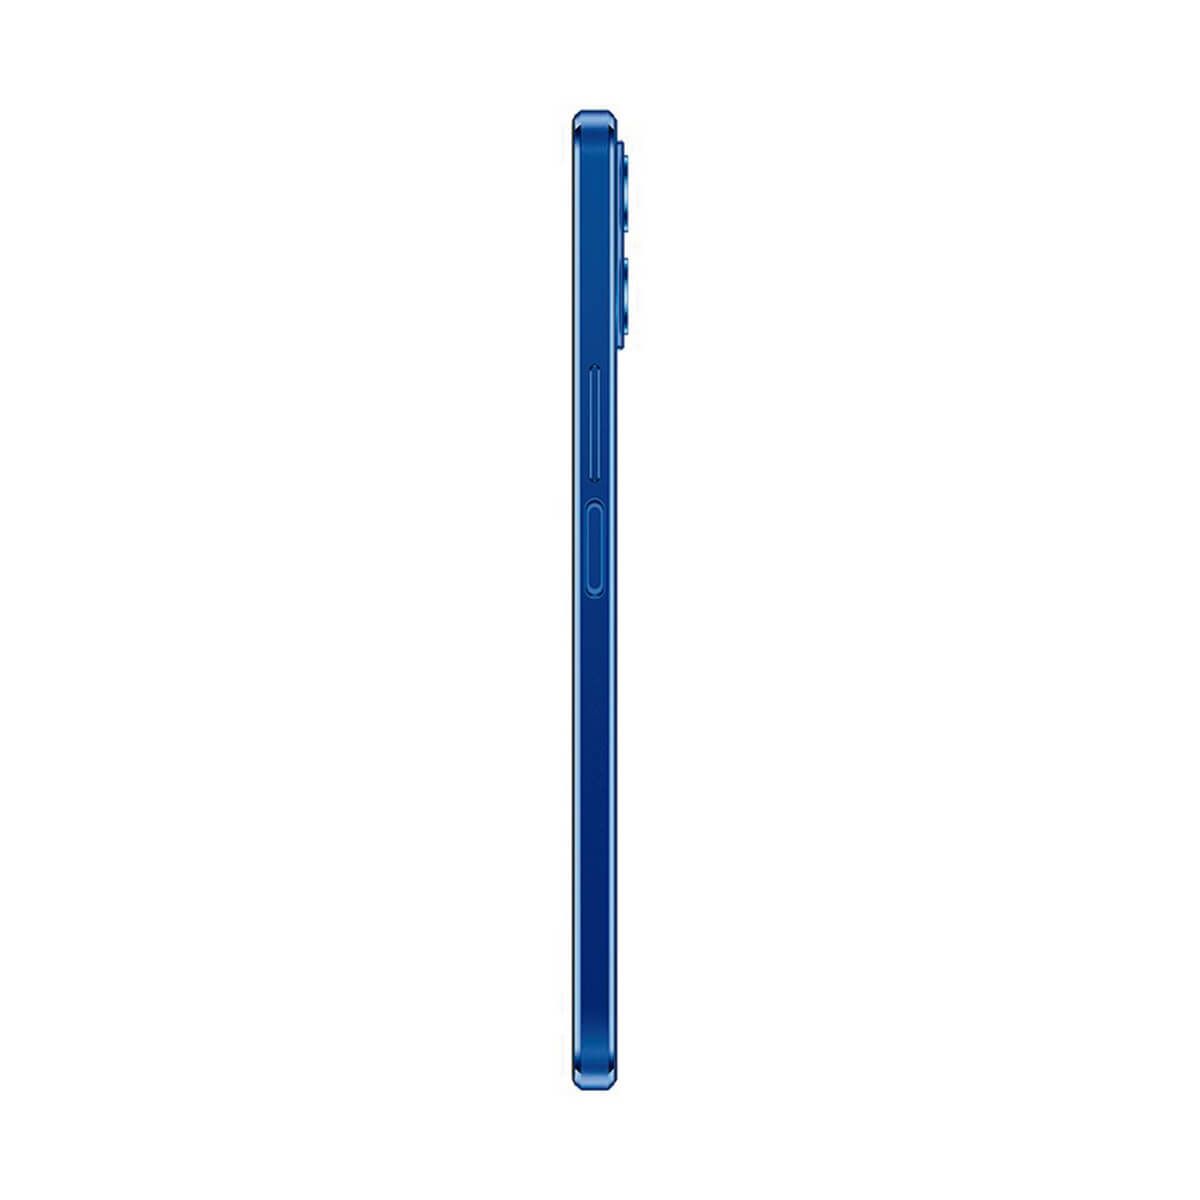 Honor X8 6GB/128GB Azul (Ocean Blue) Dual SIM TFY-LX1